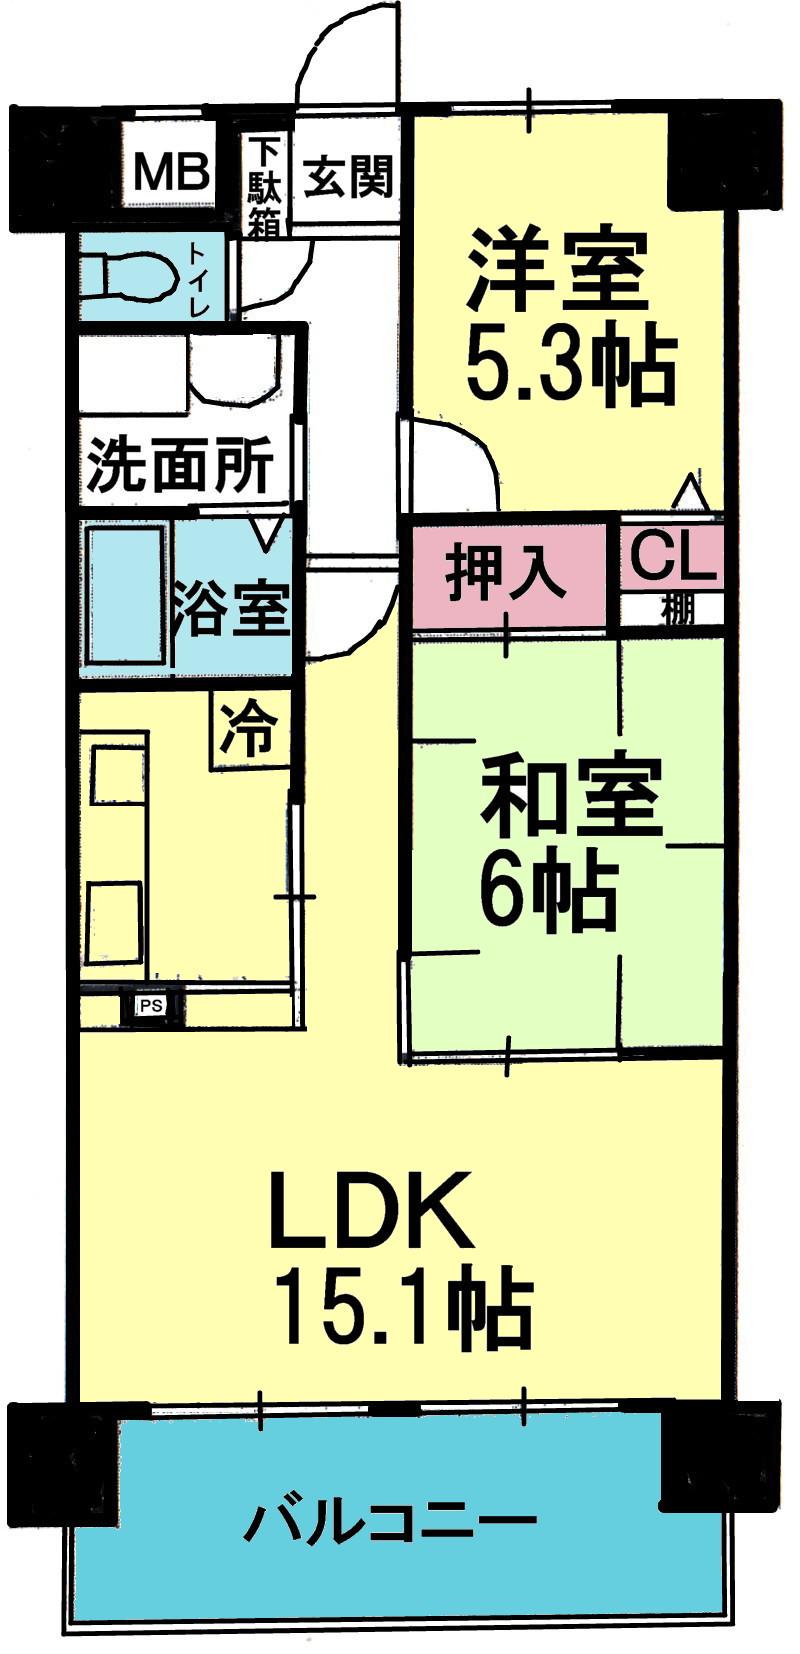 Floor plan. 2LDK, Price 10.8 million yen, Footprint 55.8 sq m , Balcony area 9.18 sq m